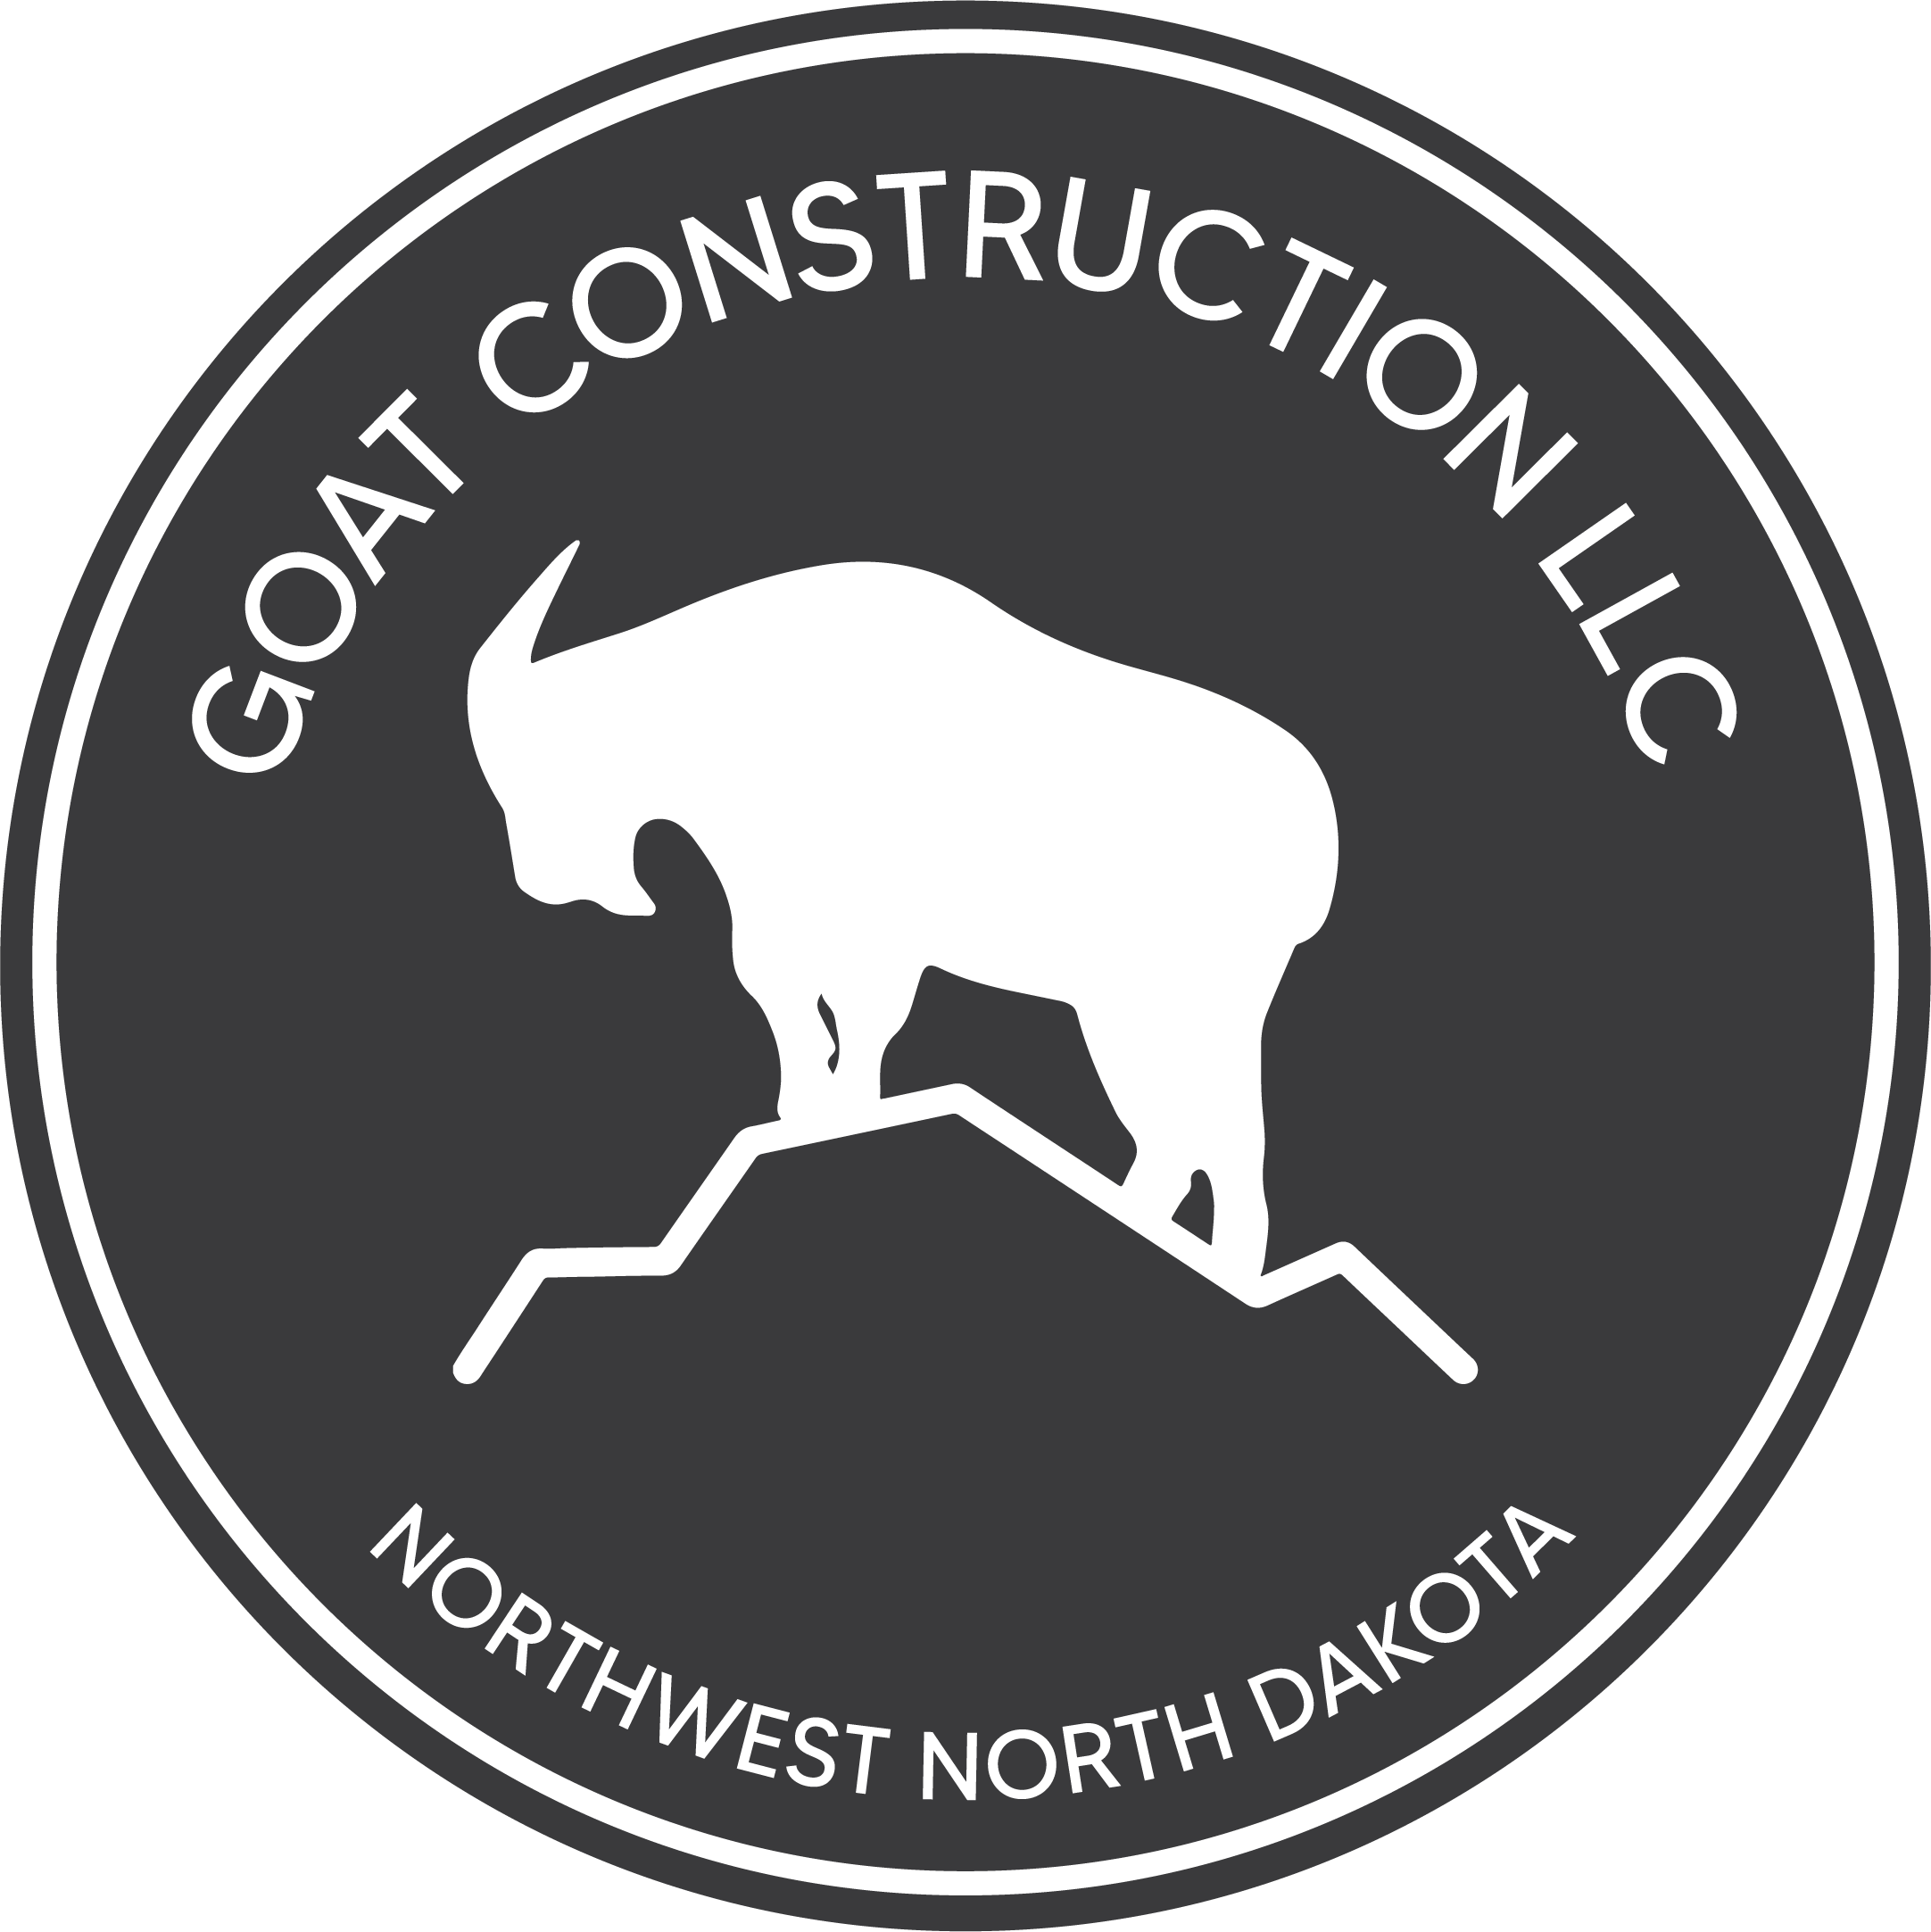 Goat Construction